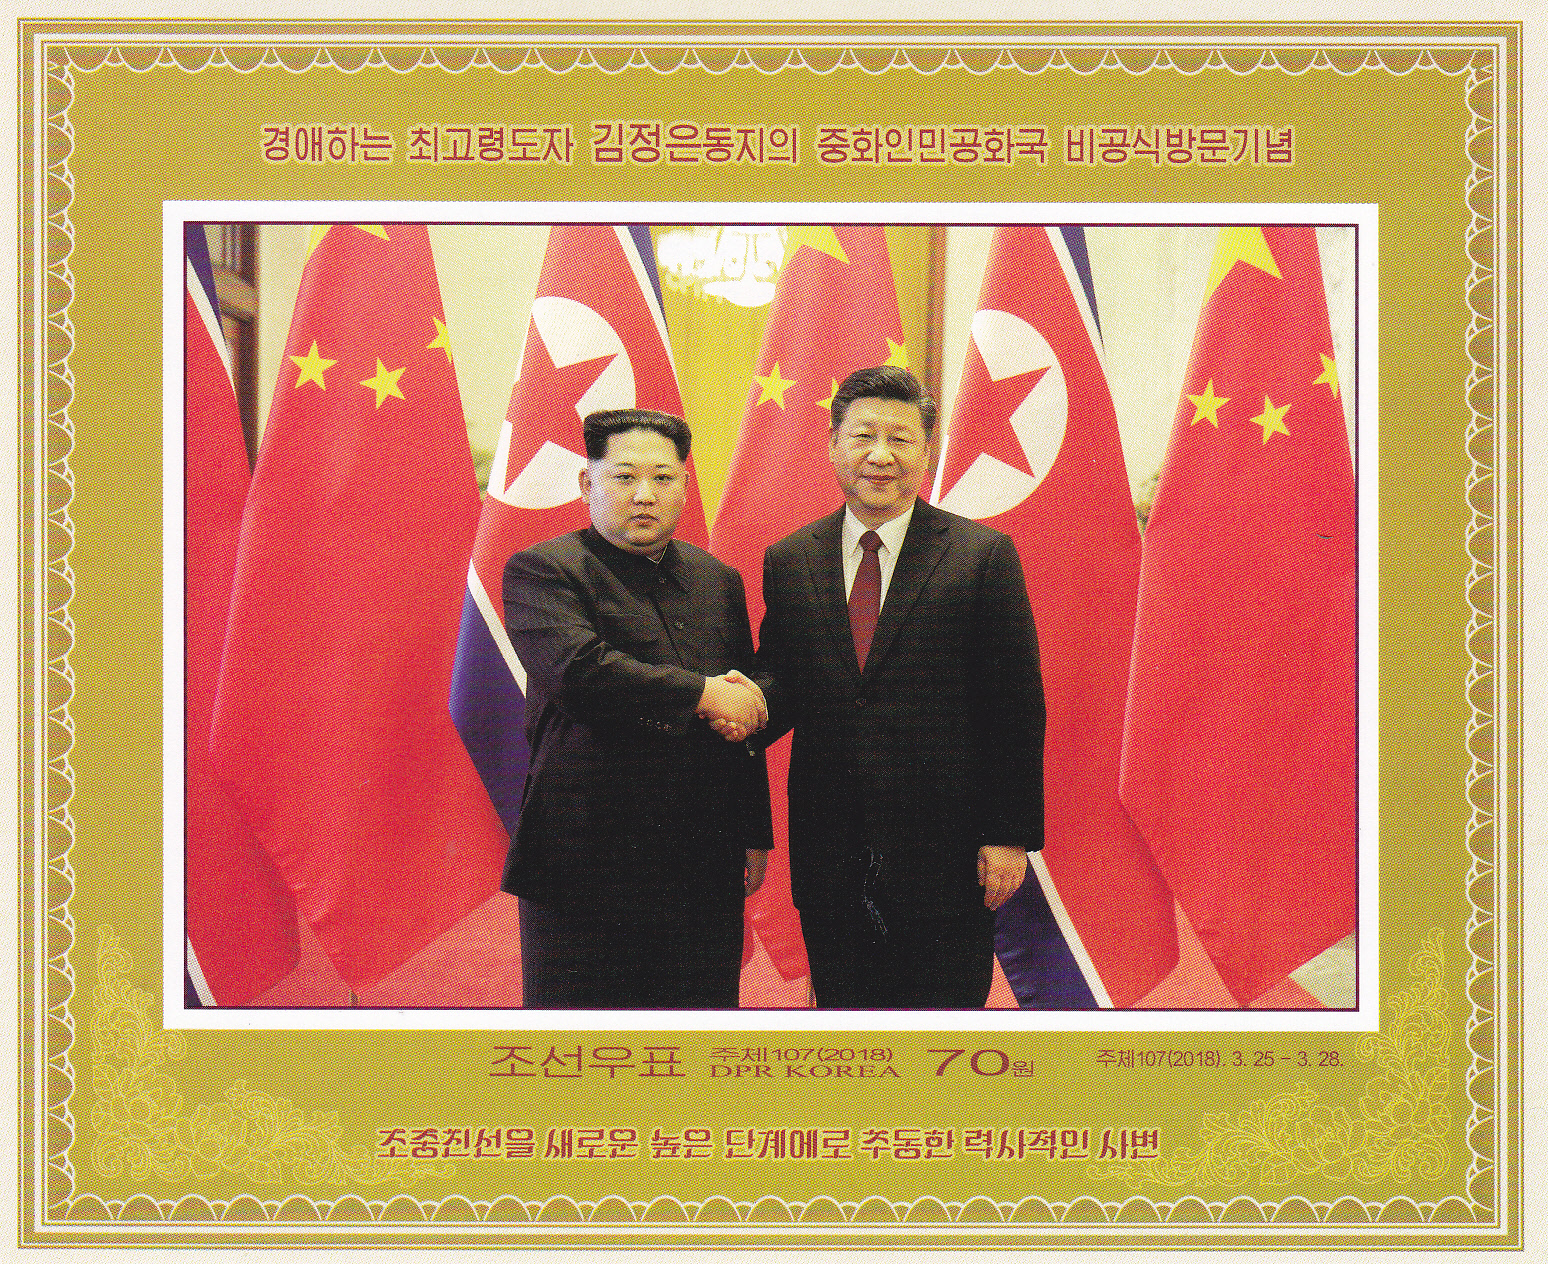 L4510, Korea "Leader Kim Visit China" SS Stamp, 2018 Imperforate RARE!